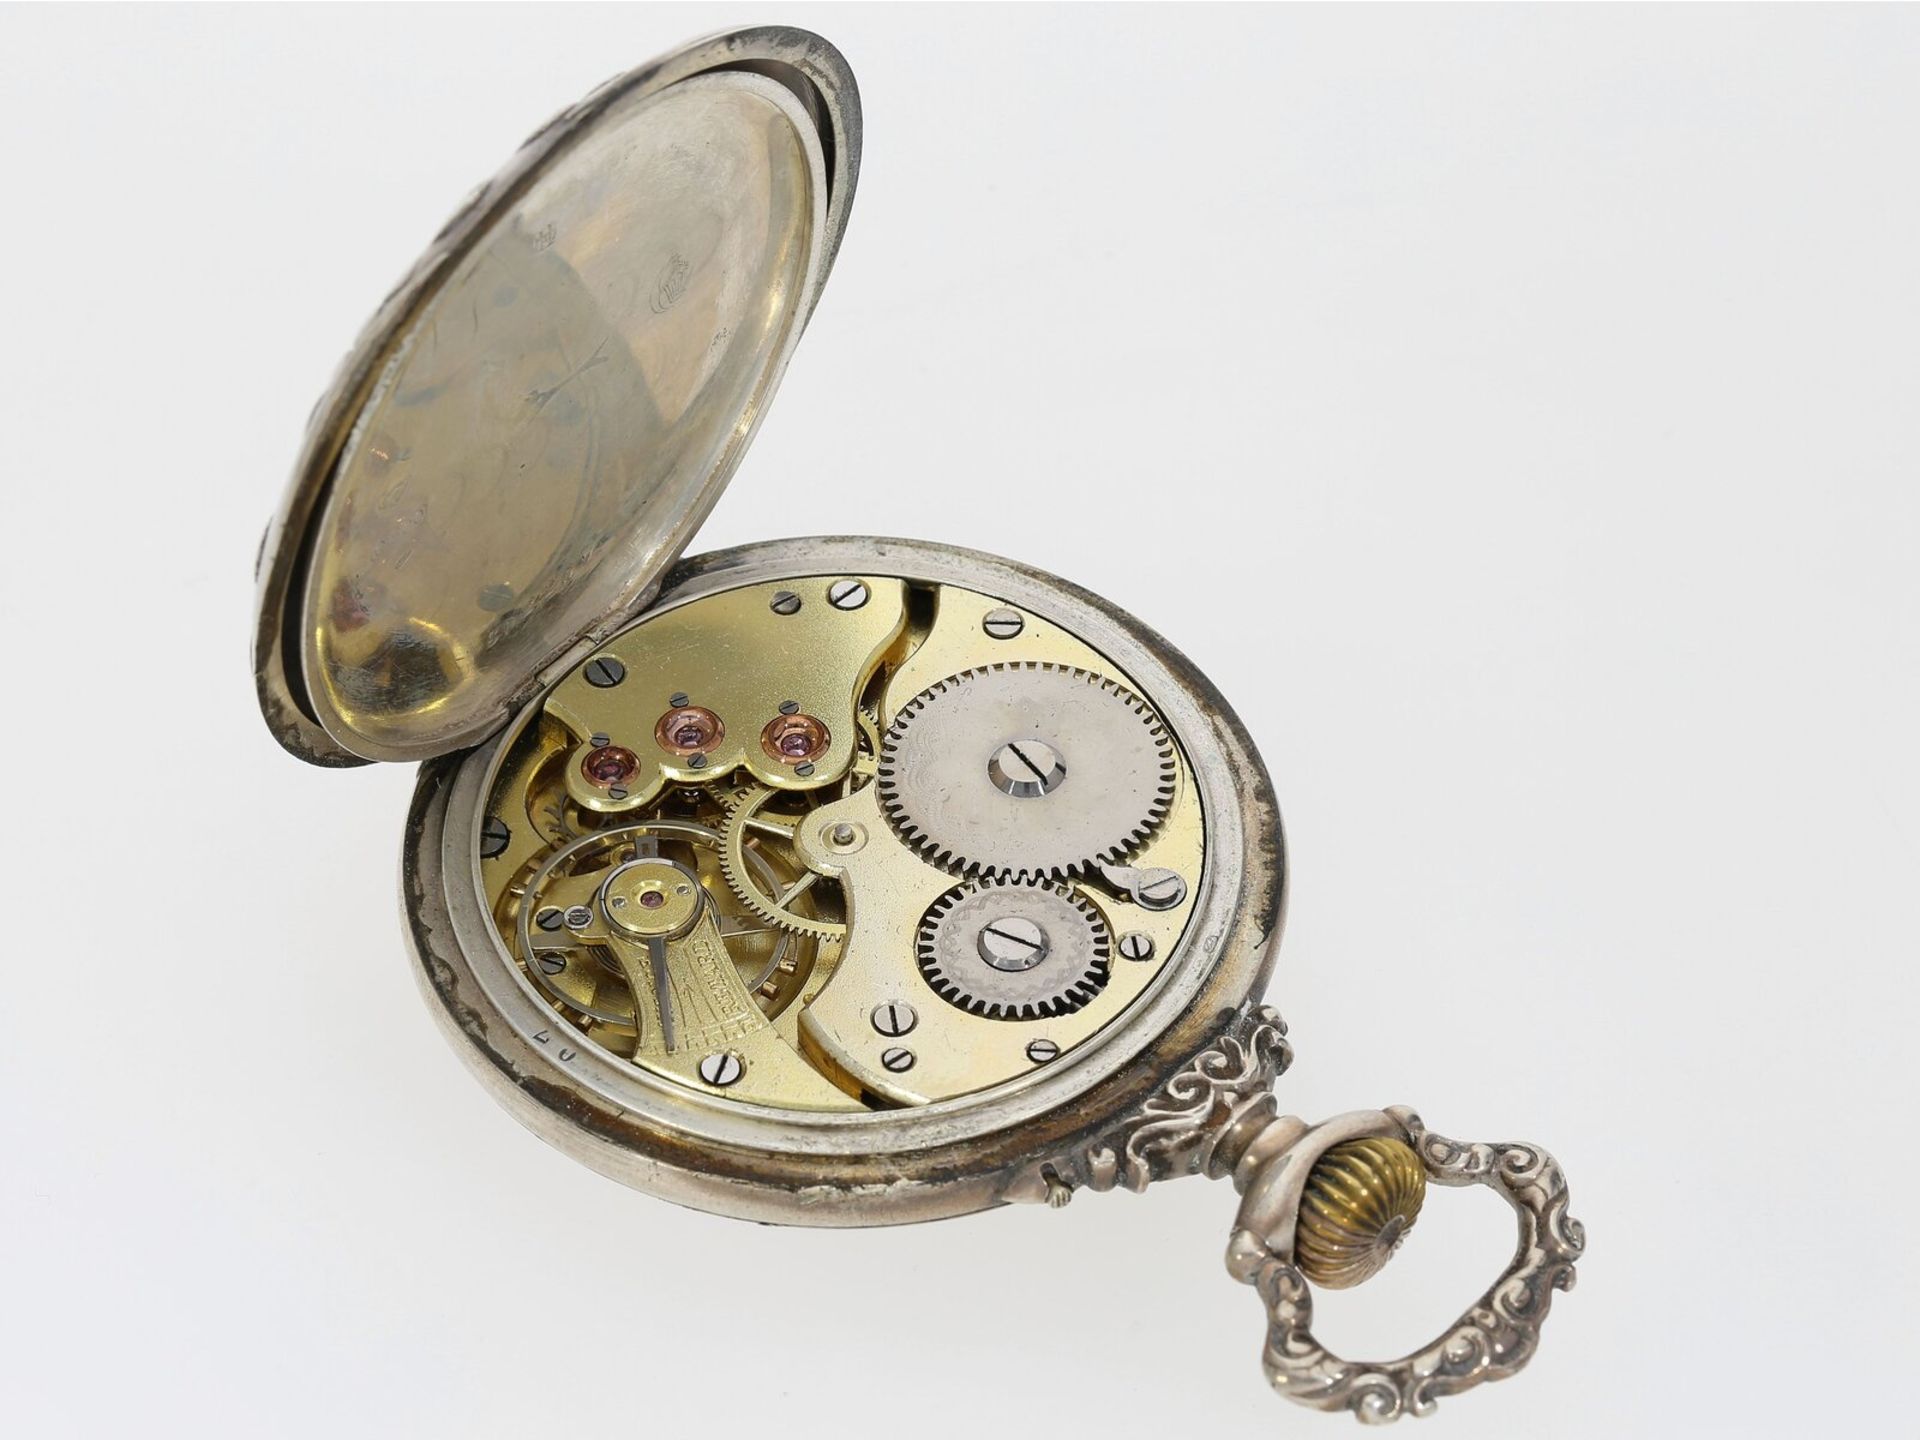 Seltenes Movado Ankerchronometer mit dekorativem Jugendstil-Reliefgehäuse, Silber, um 1900 - Bild 4 aus 4